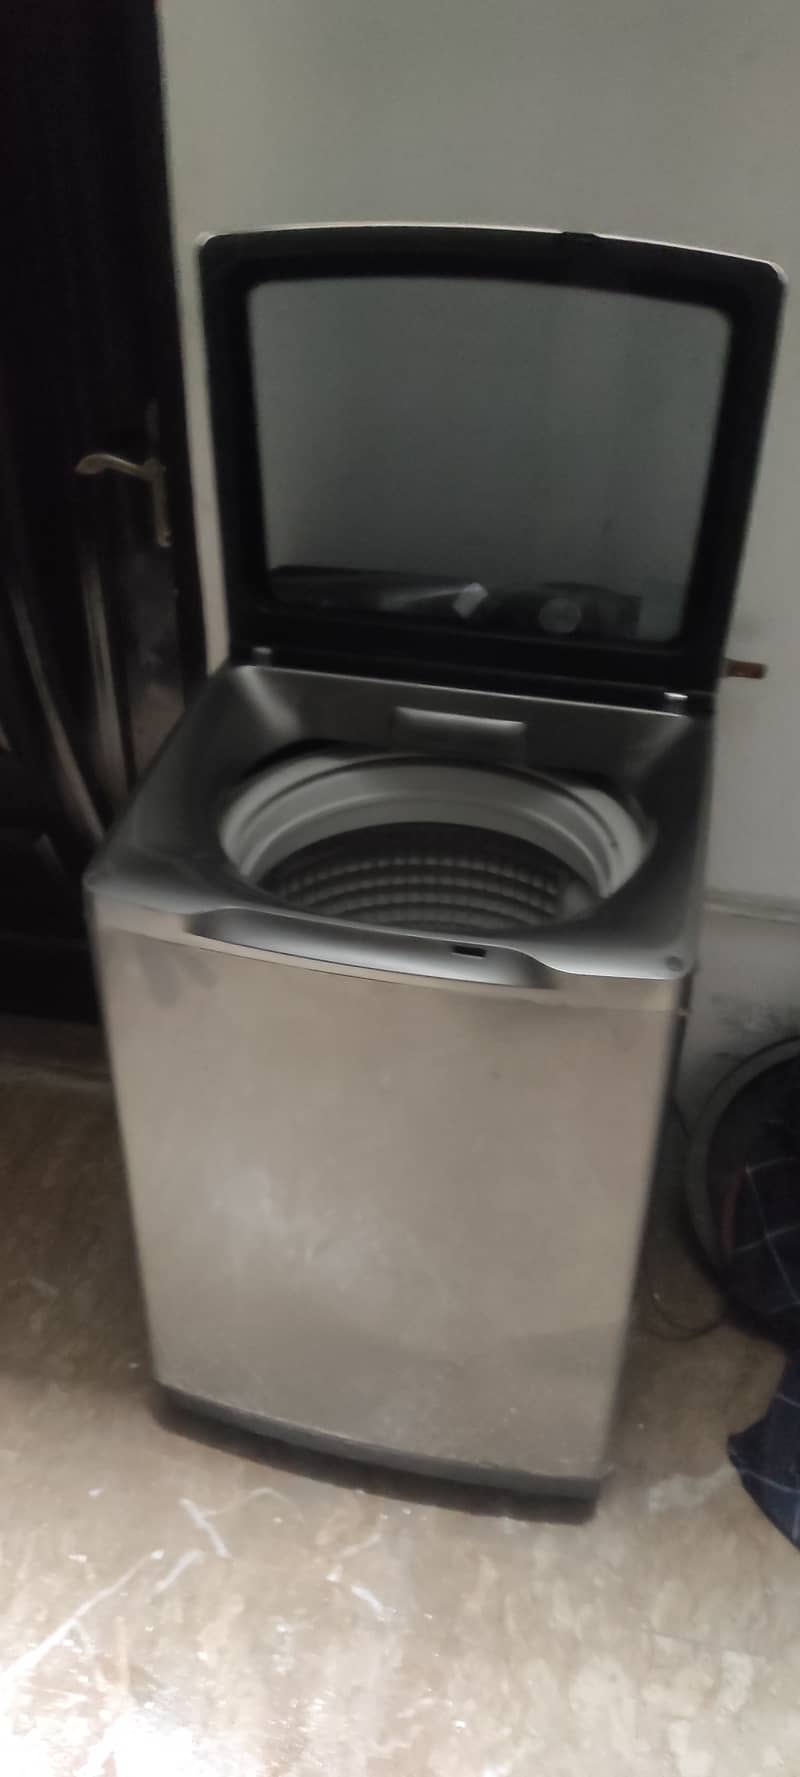 Fully automatic washing machine 5